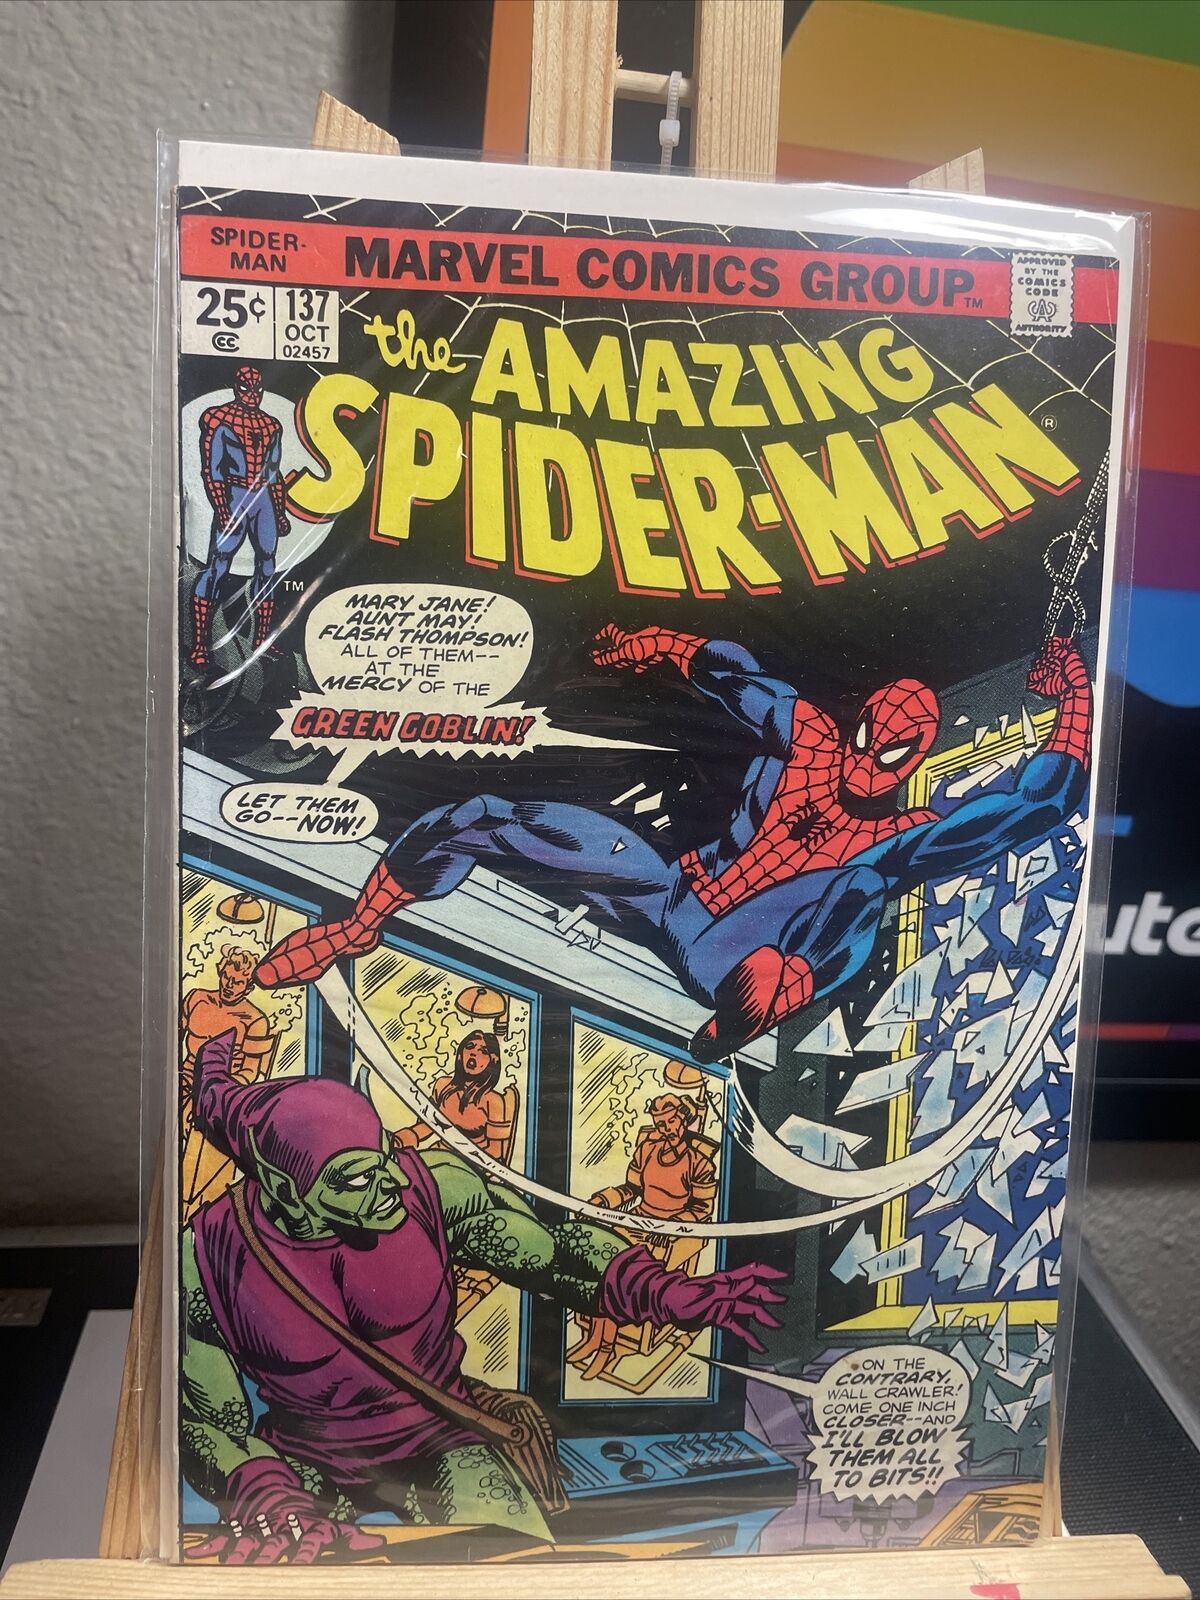 The Amazing Spider-Man #137 (Marvel Comics October 1974)